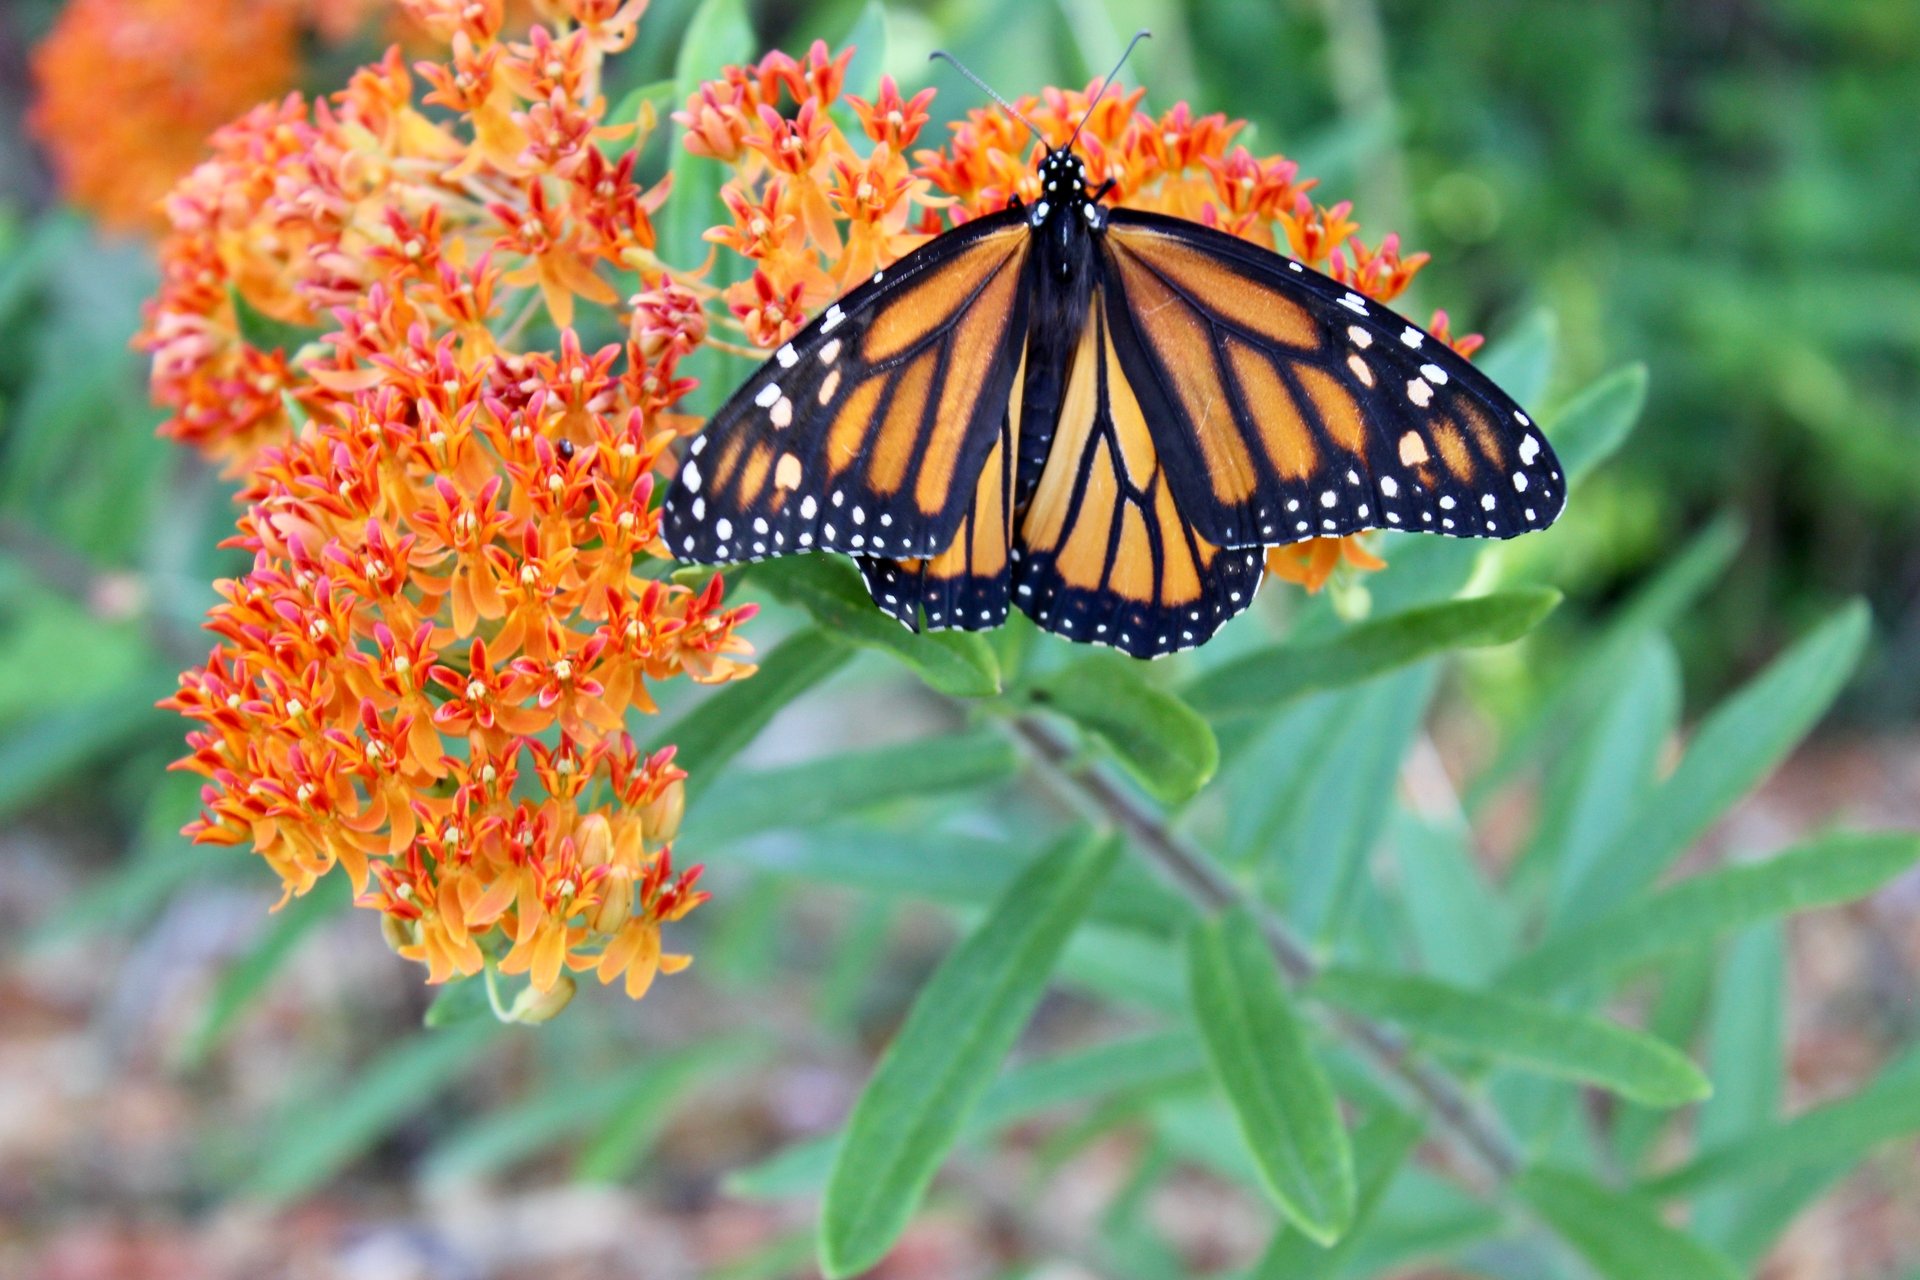 A Monarch butterfly on orange Butterfly Weed.